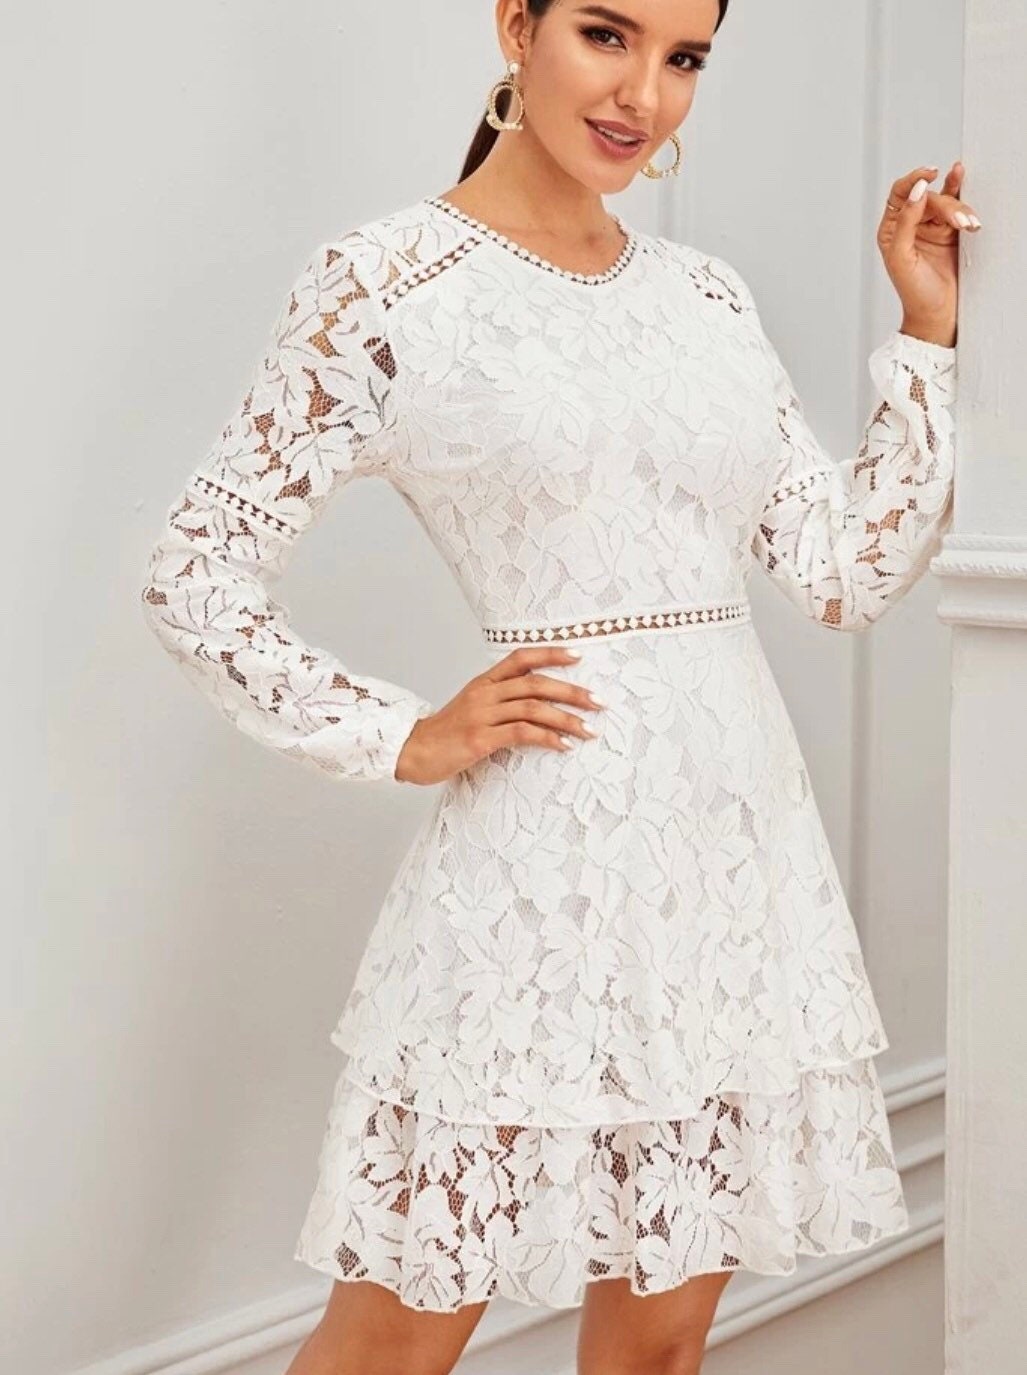 White lace dress | Etsy